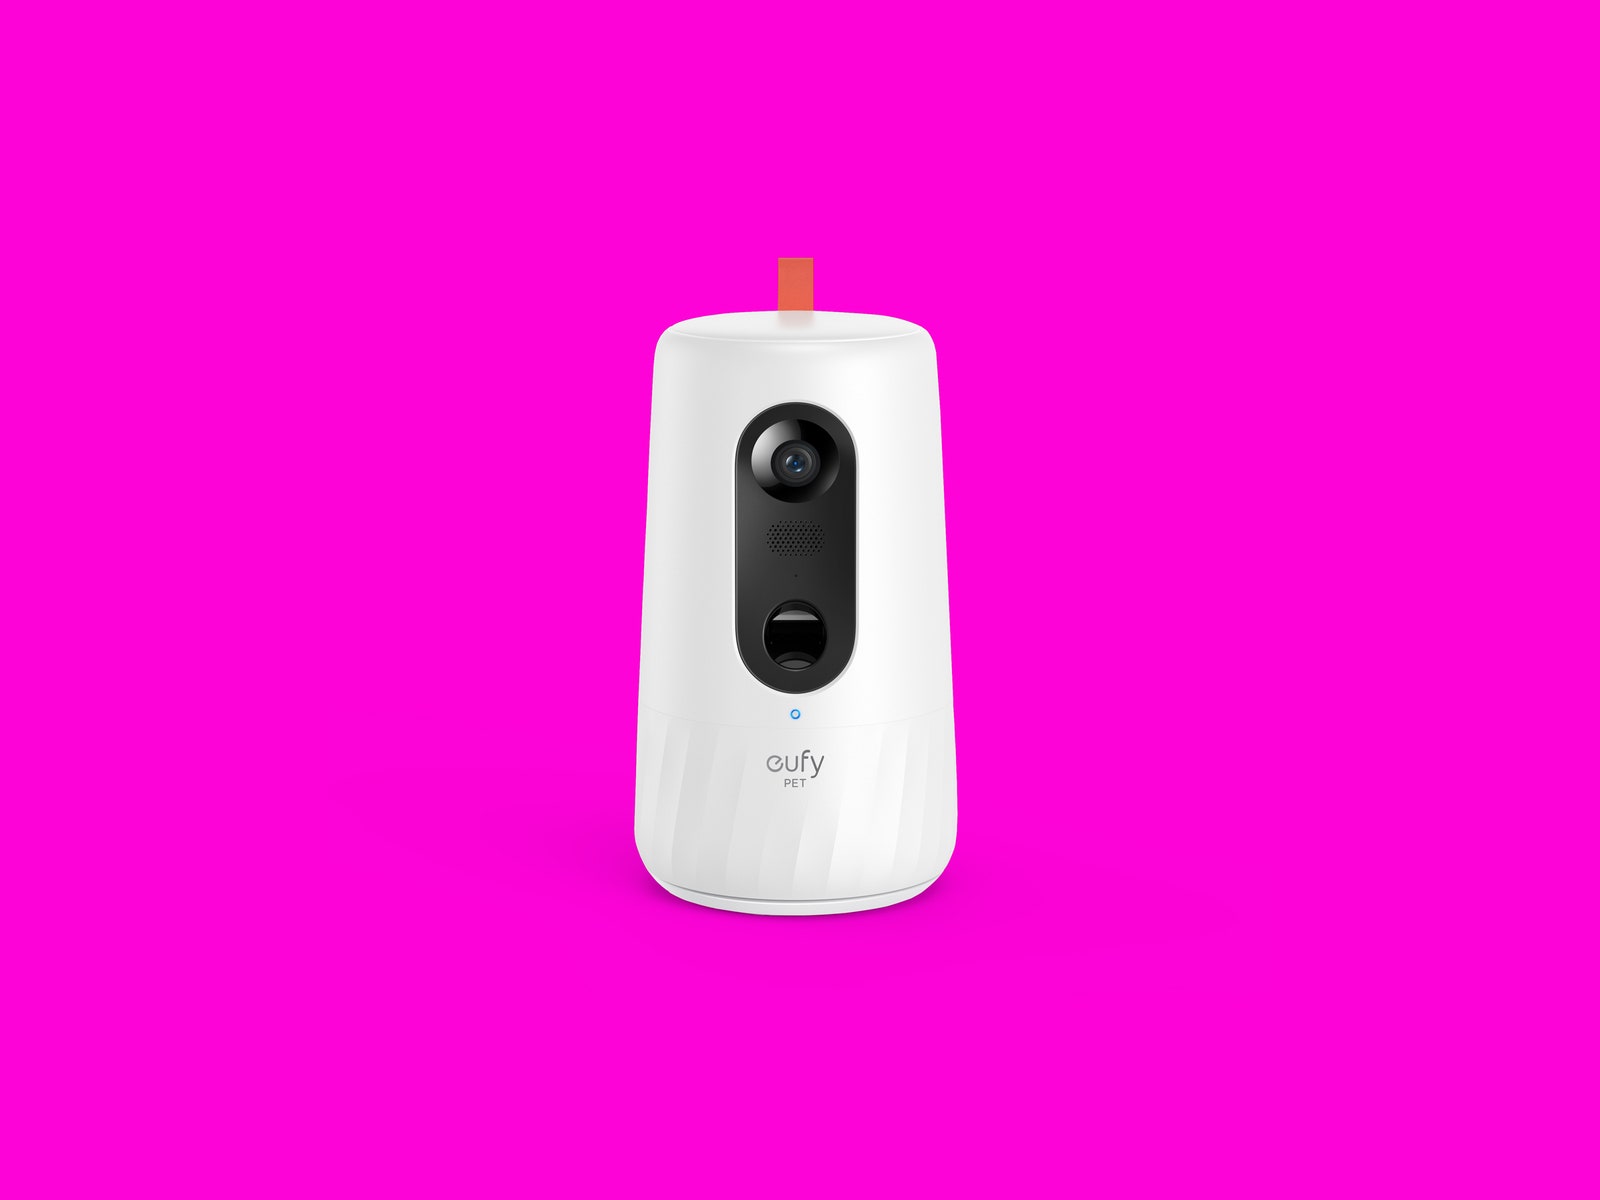 Eufy camera on pink